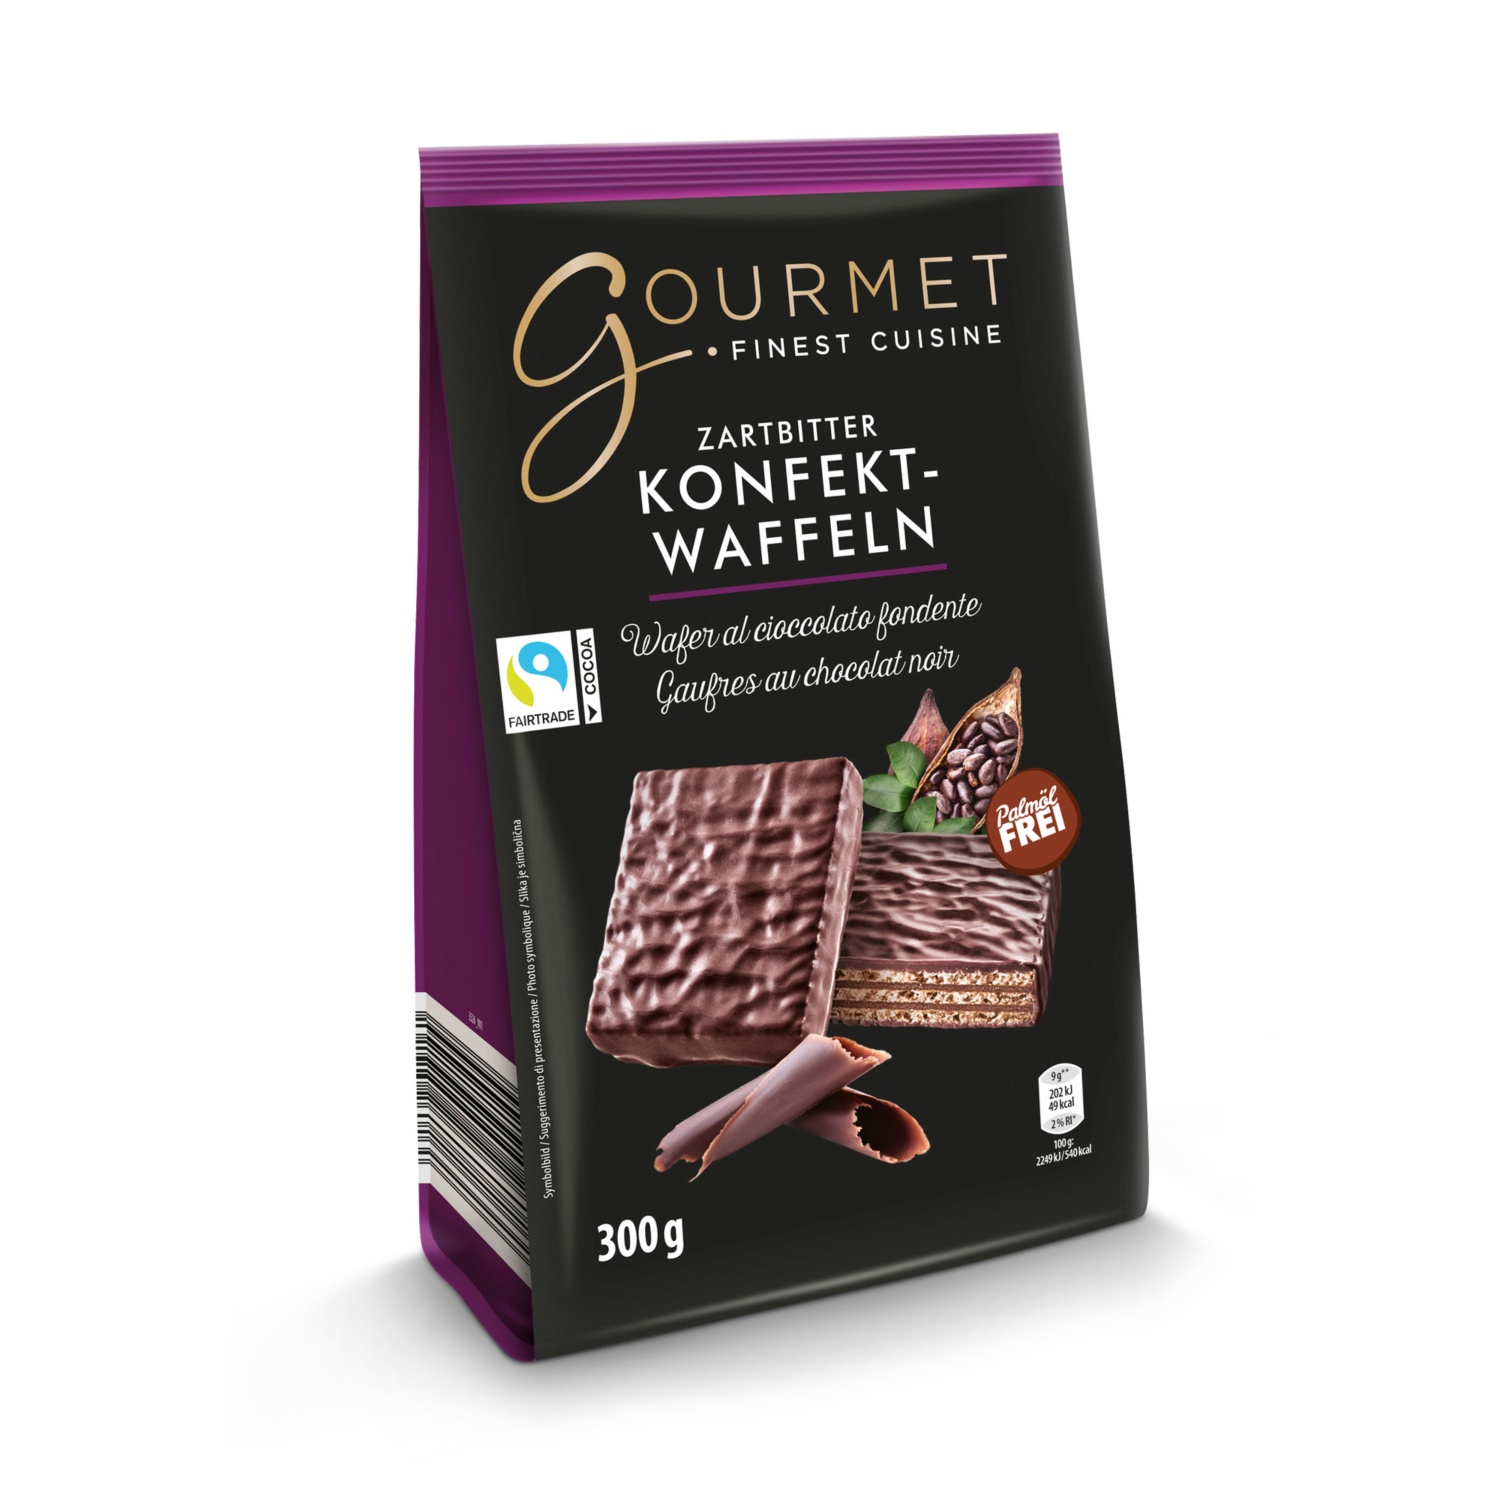 GOURMET Wafer al cioccolato fondente con copertura al cioccolato